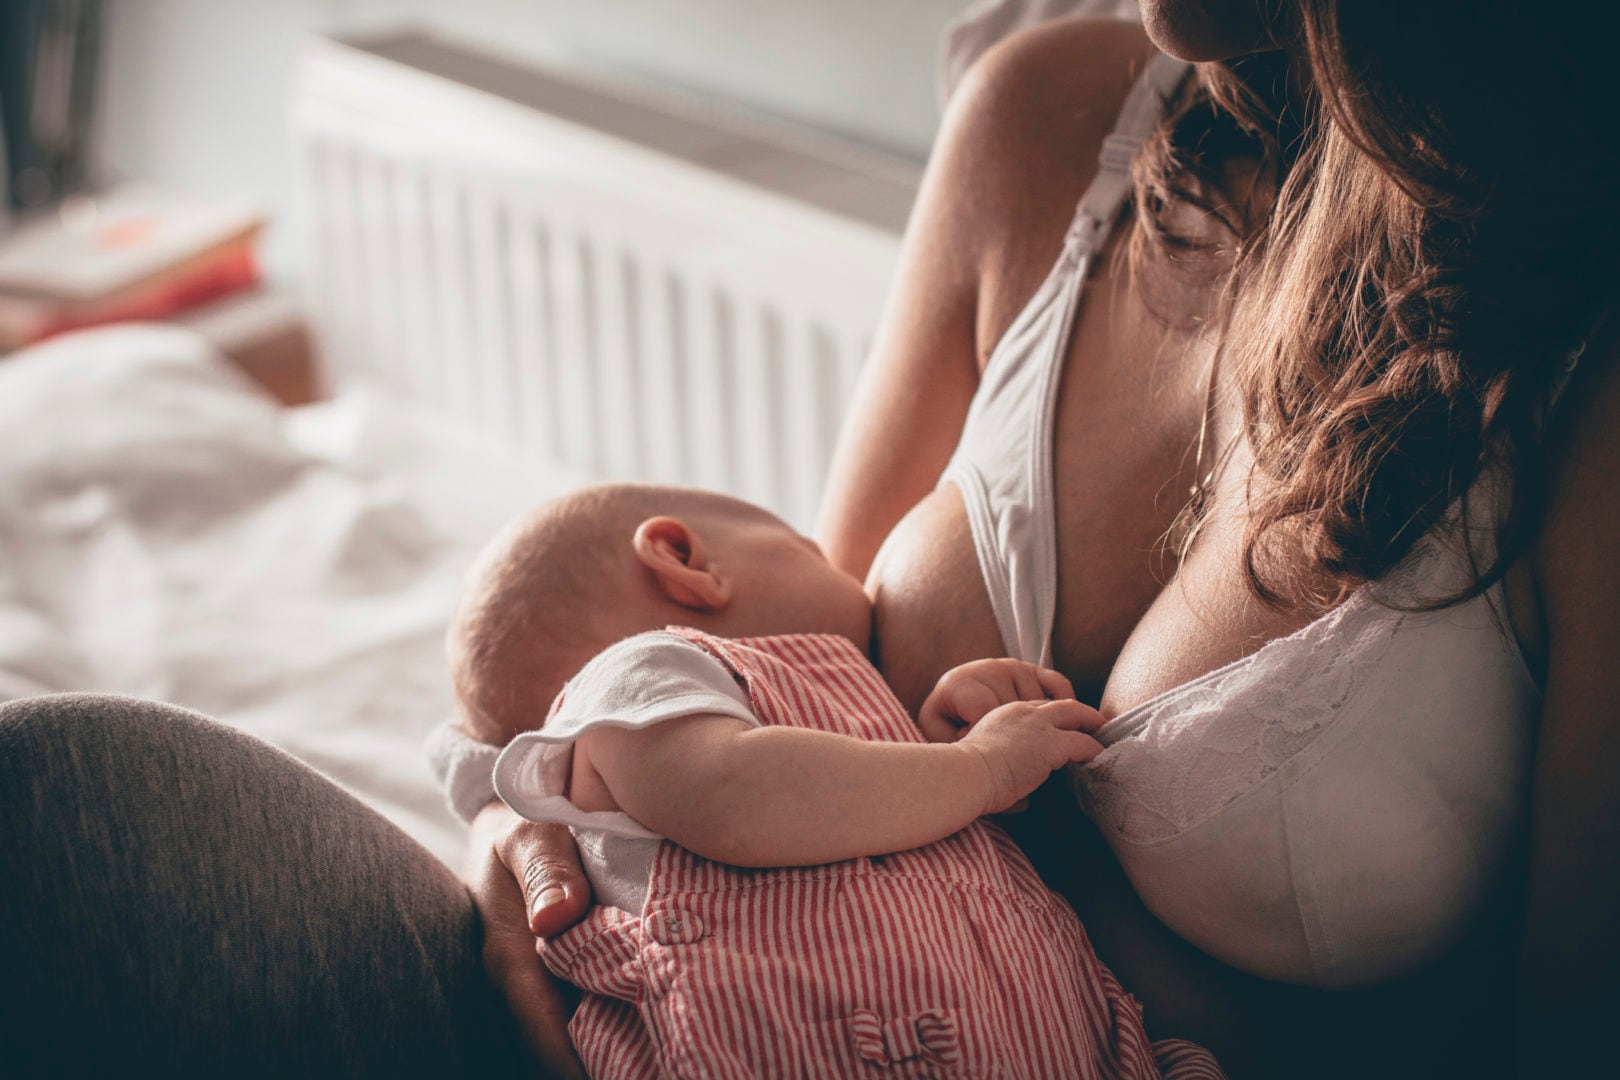 Sexy Nursing Push Up Nursing Bras for Breastfeeding Comfy